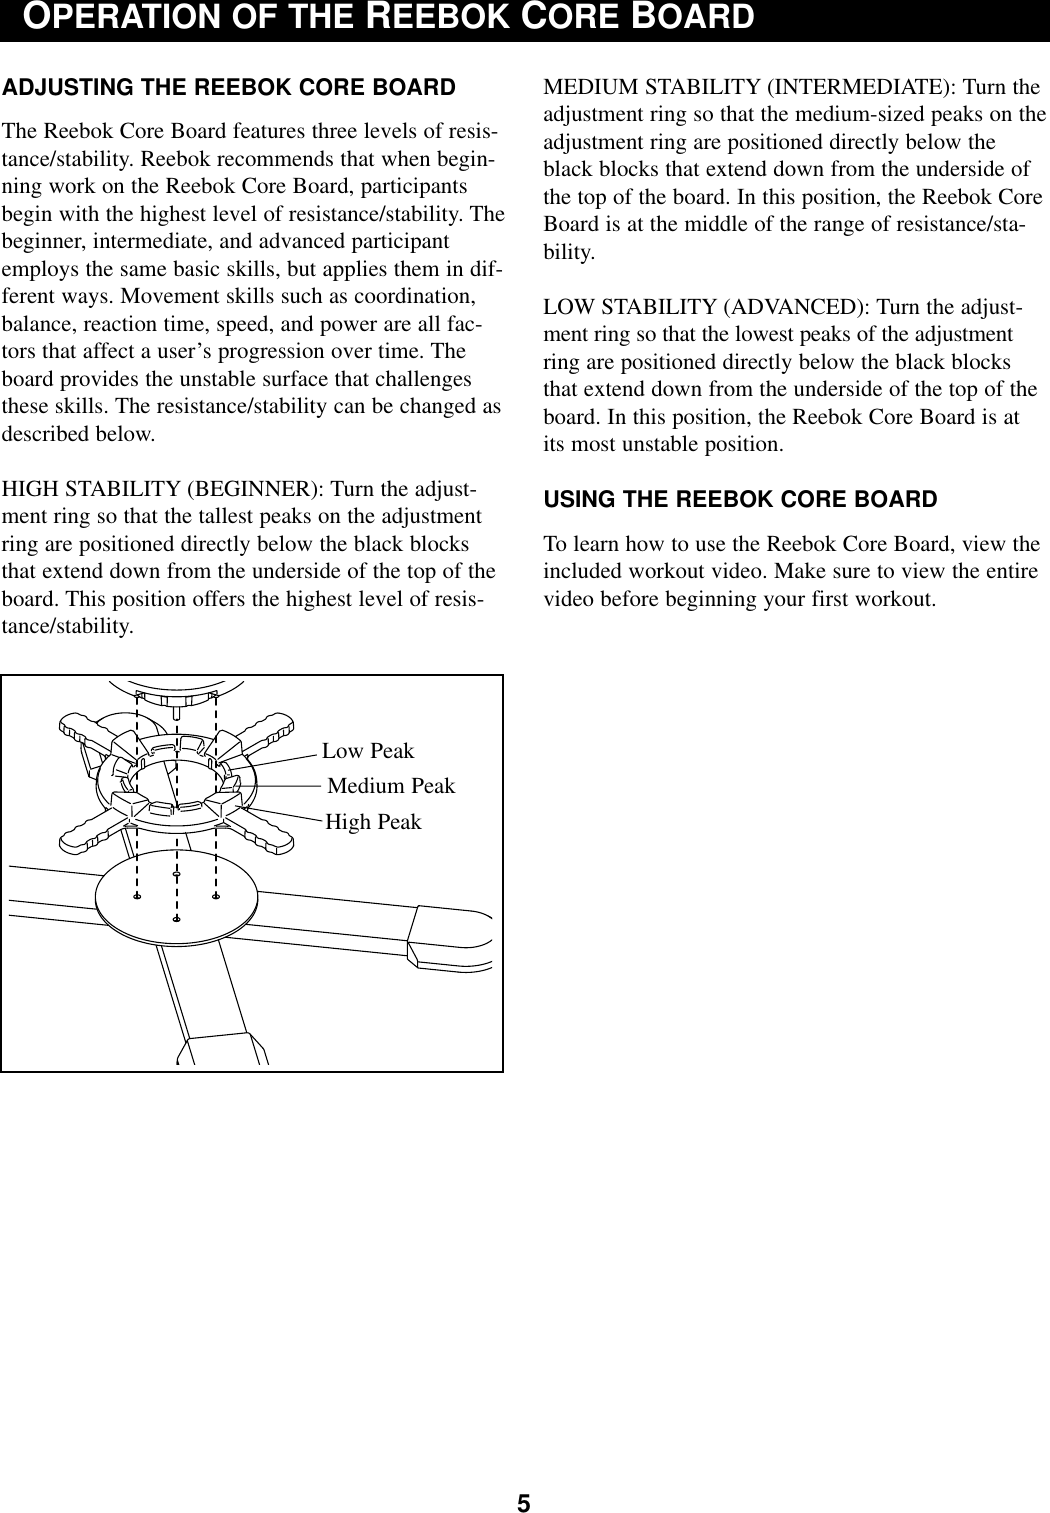 Page 5 of 8 - Reebok Reebok-Rbct50900-Owners-Manual